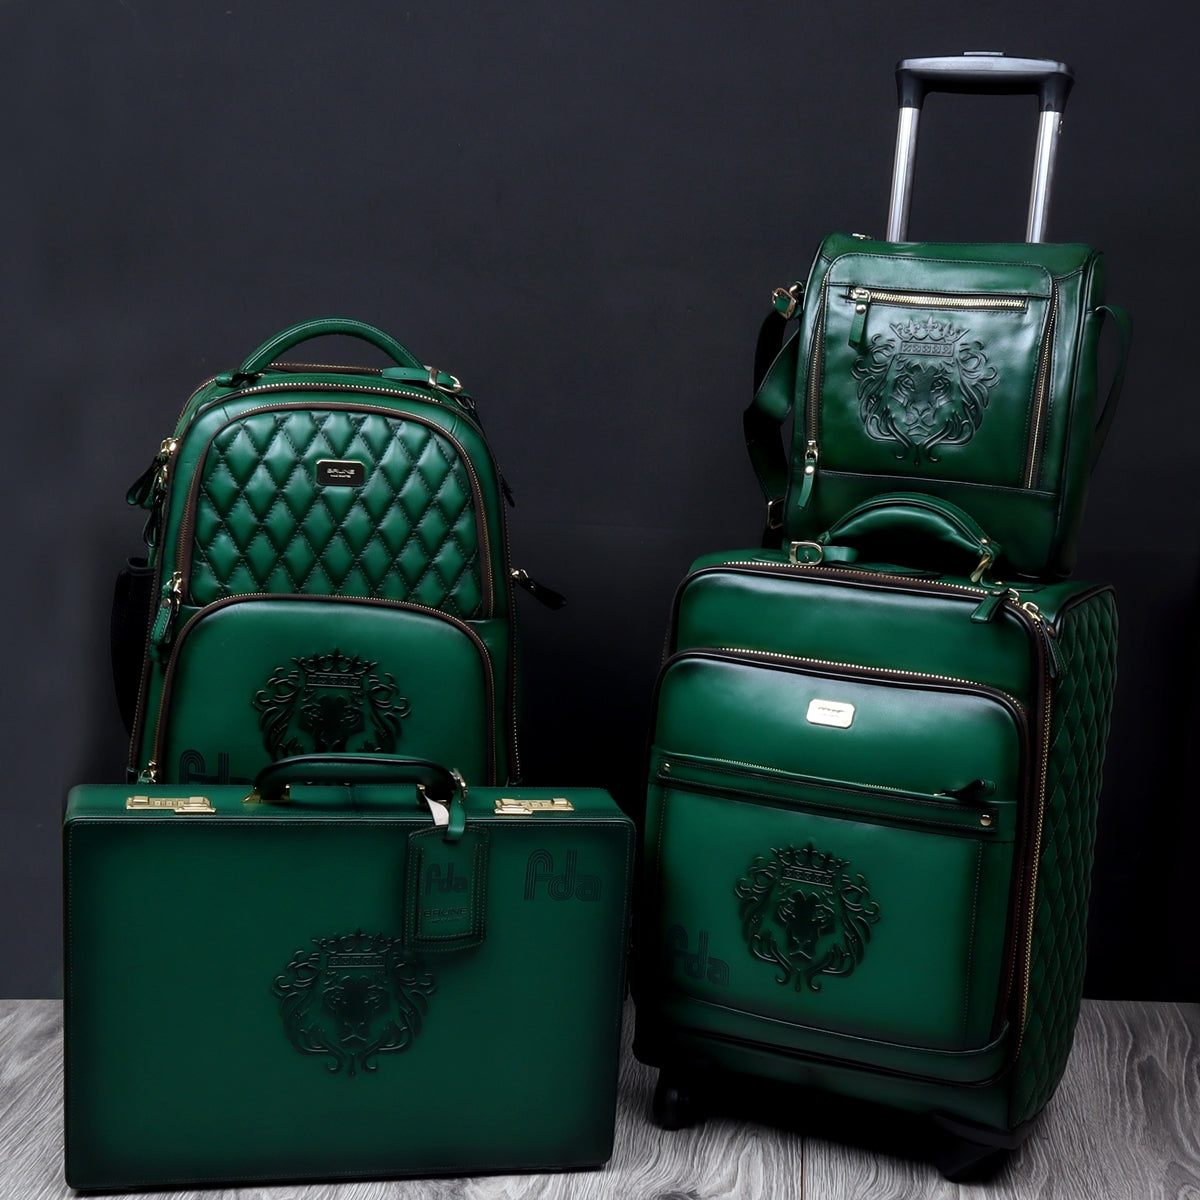 Bespoked Green Leather Backpack, Trolly Bag & Briefcase by Brune & Bareskin